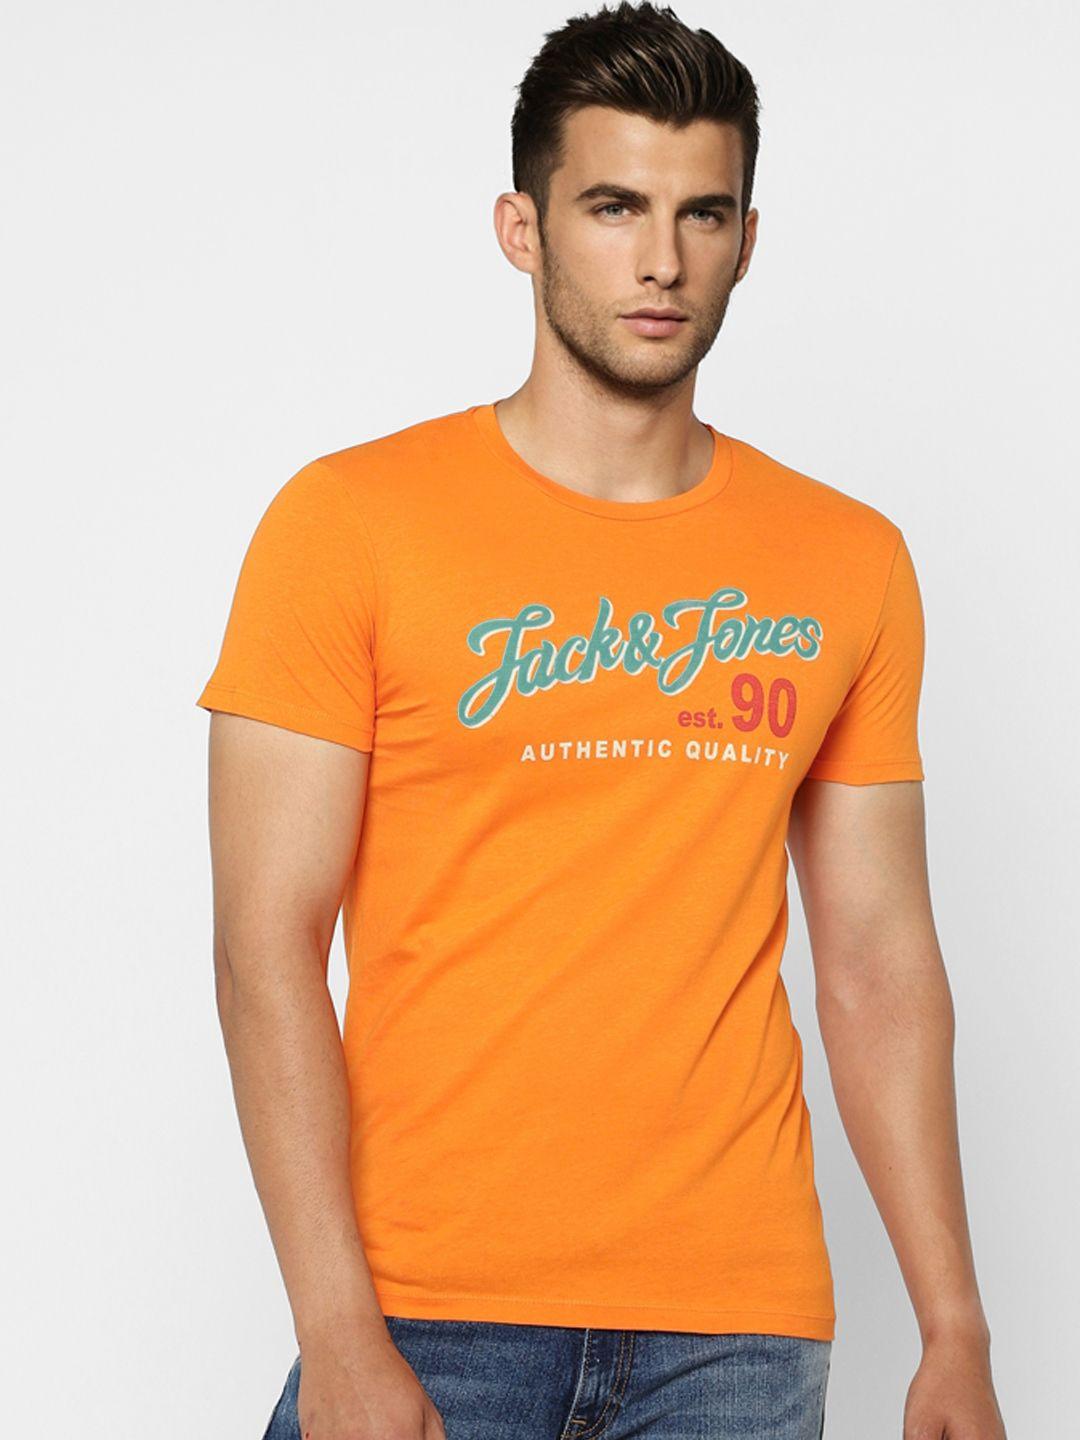 jack & jones men orange brand logo printed slim fit t-shirt